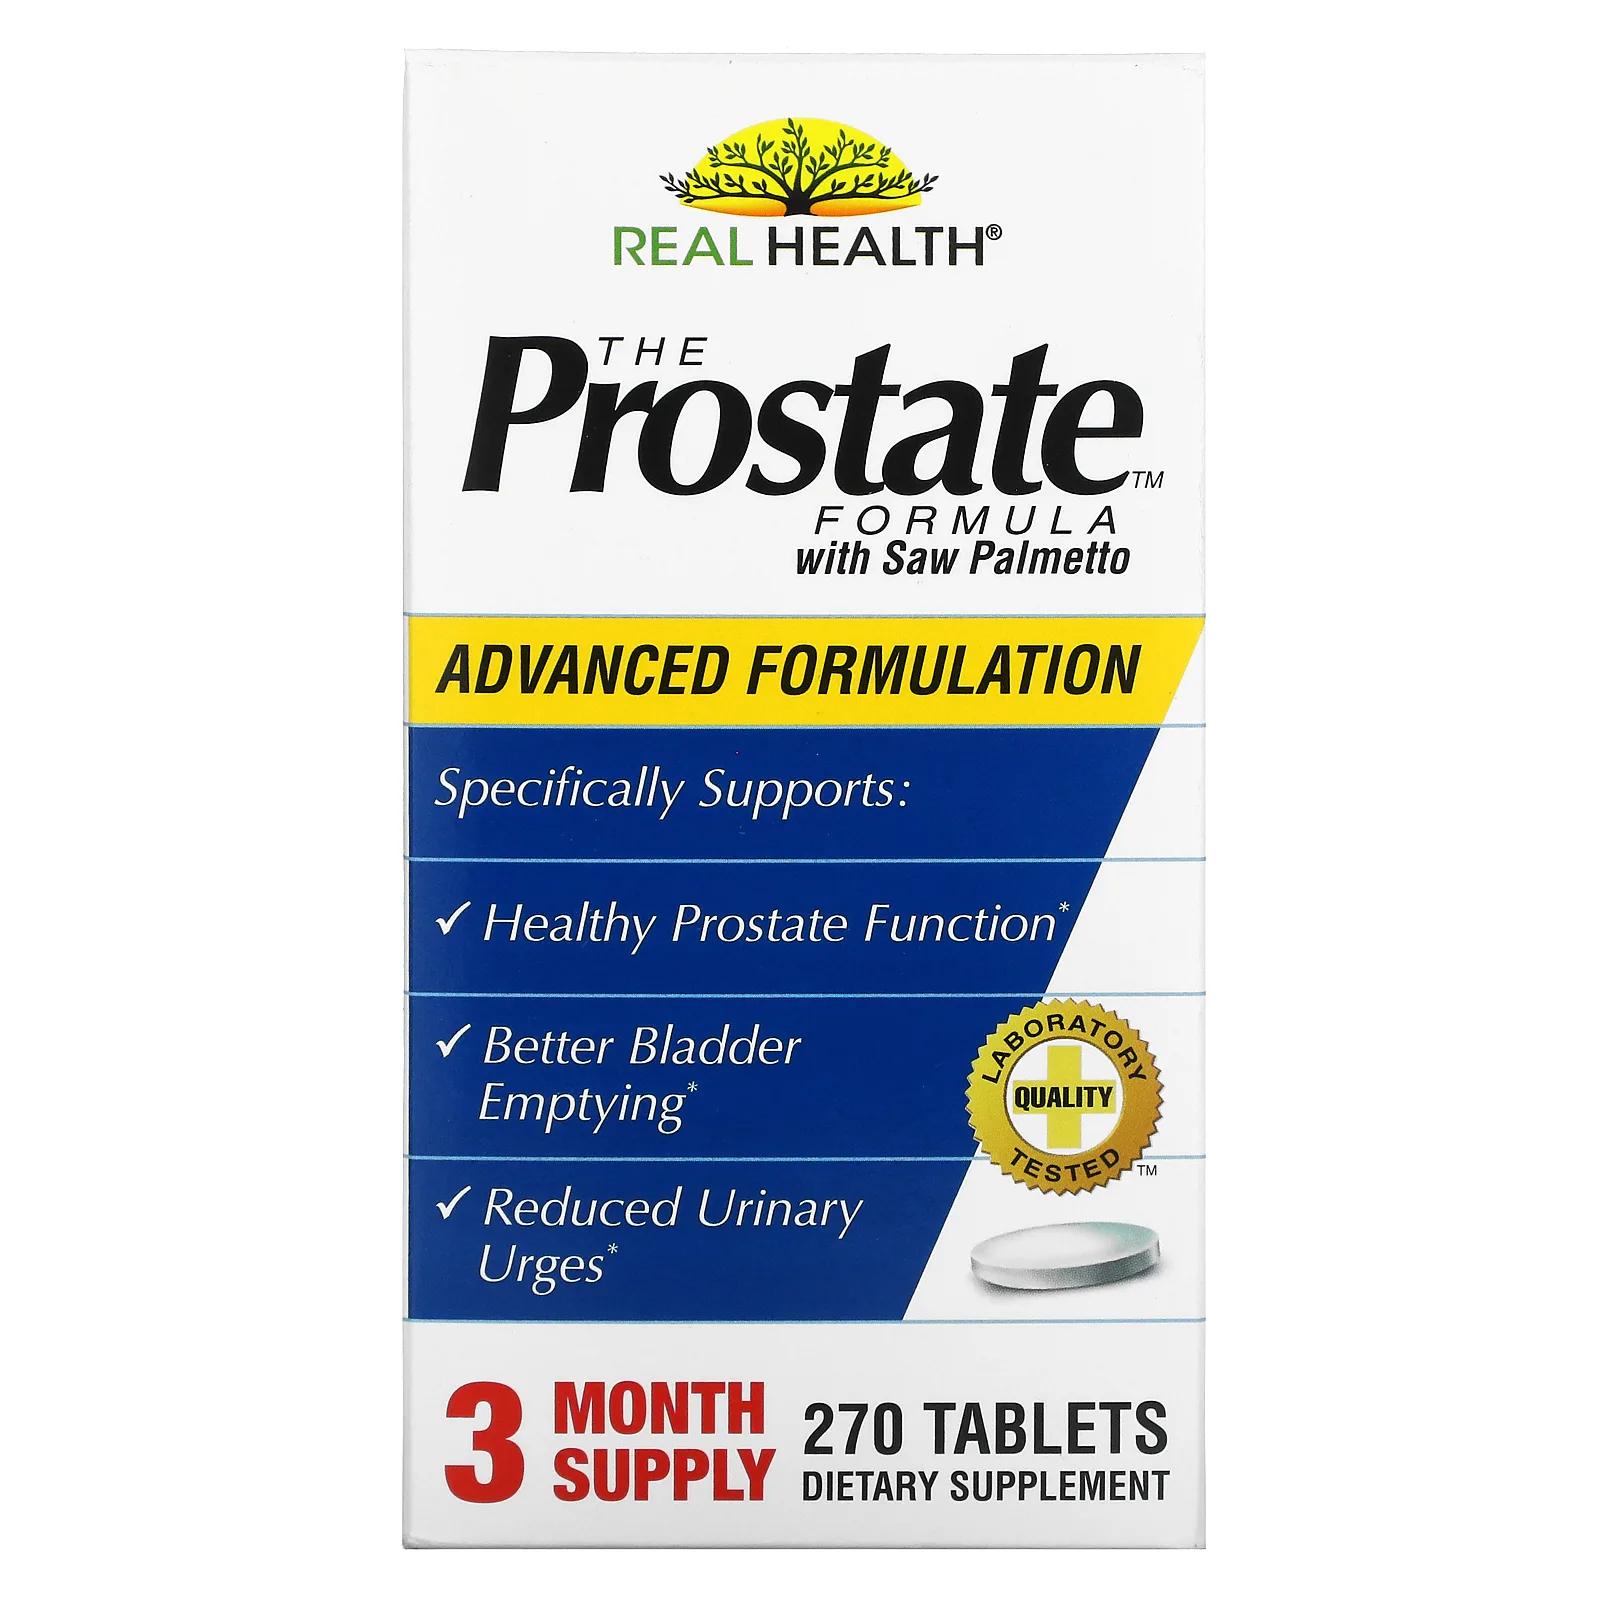 Real Health Формула для простаты с сереноей 270 таблеток real health the prostate комплекс для здоровья простаты с сереноей 90 таблеток